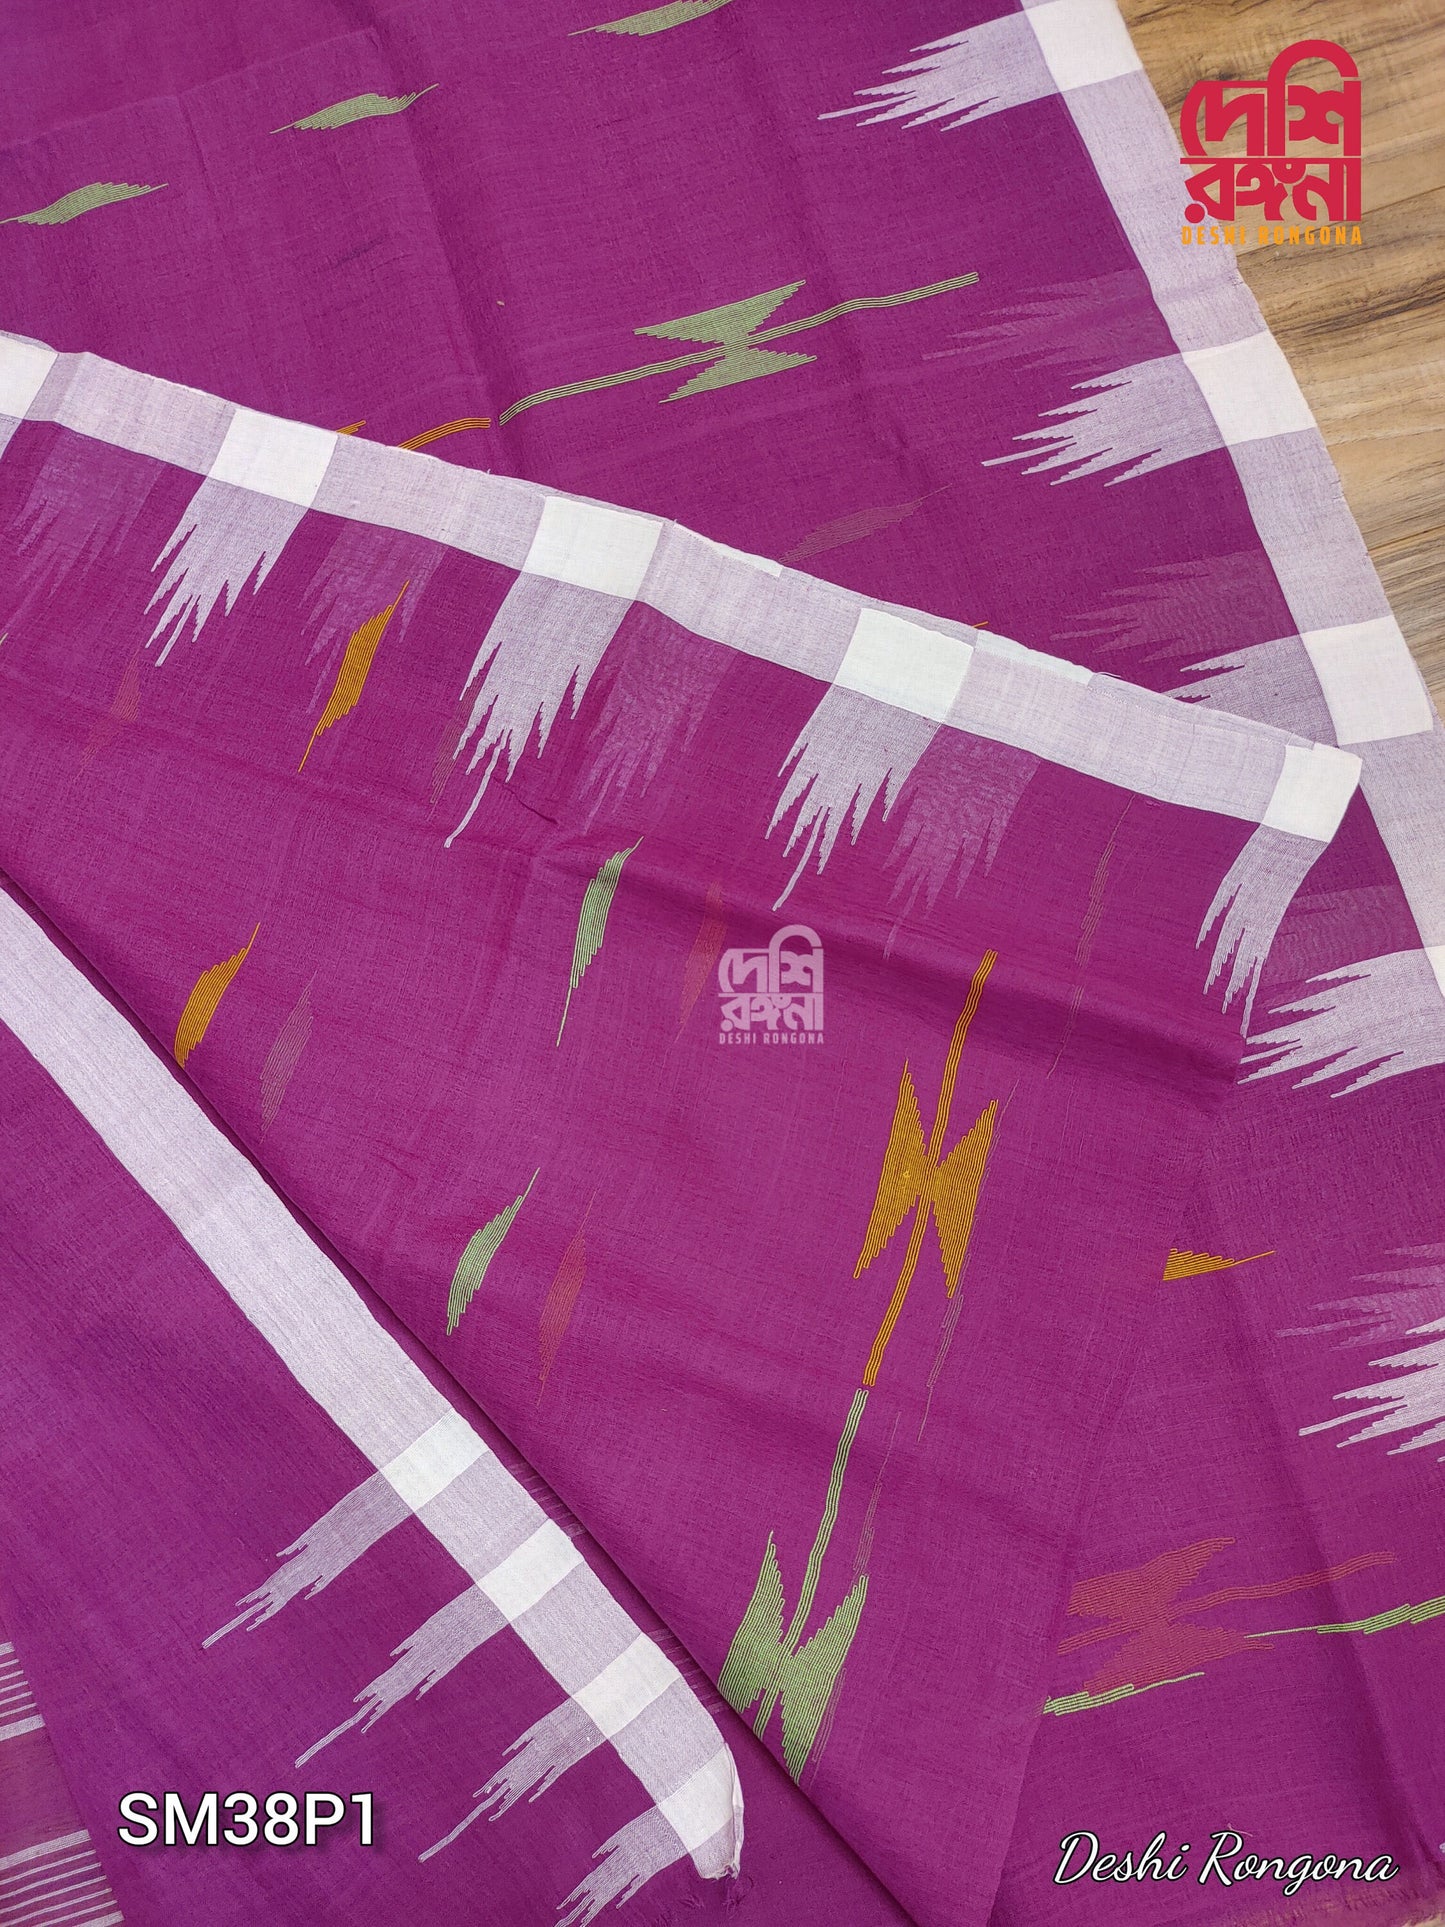 Sylheti Original Monipuri Handwoven Soft Cotton Saree, Purple Pink with White Woven Border, Bangladeshi, Traditional Saree